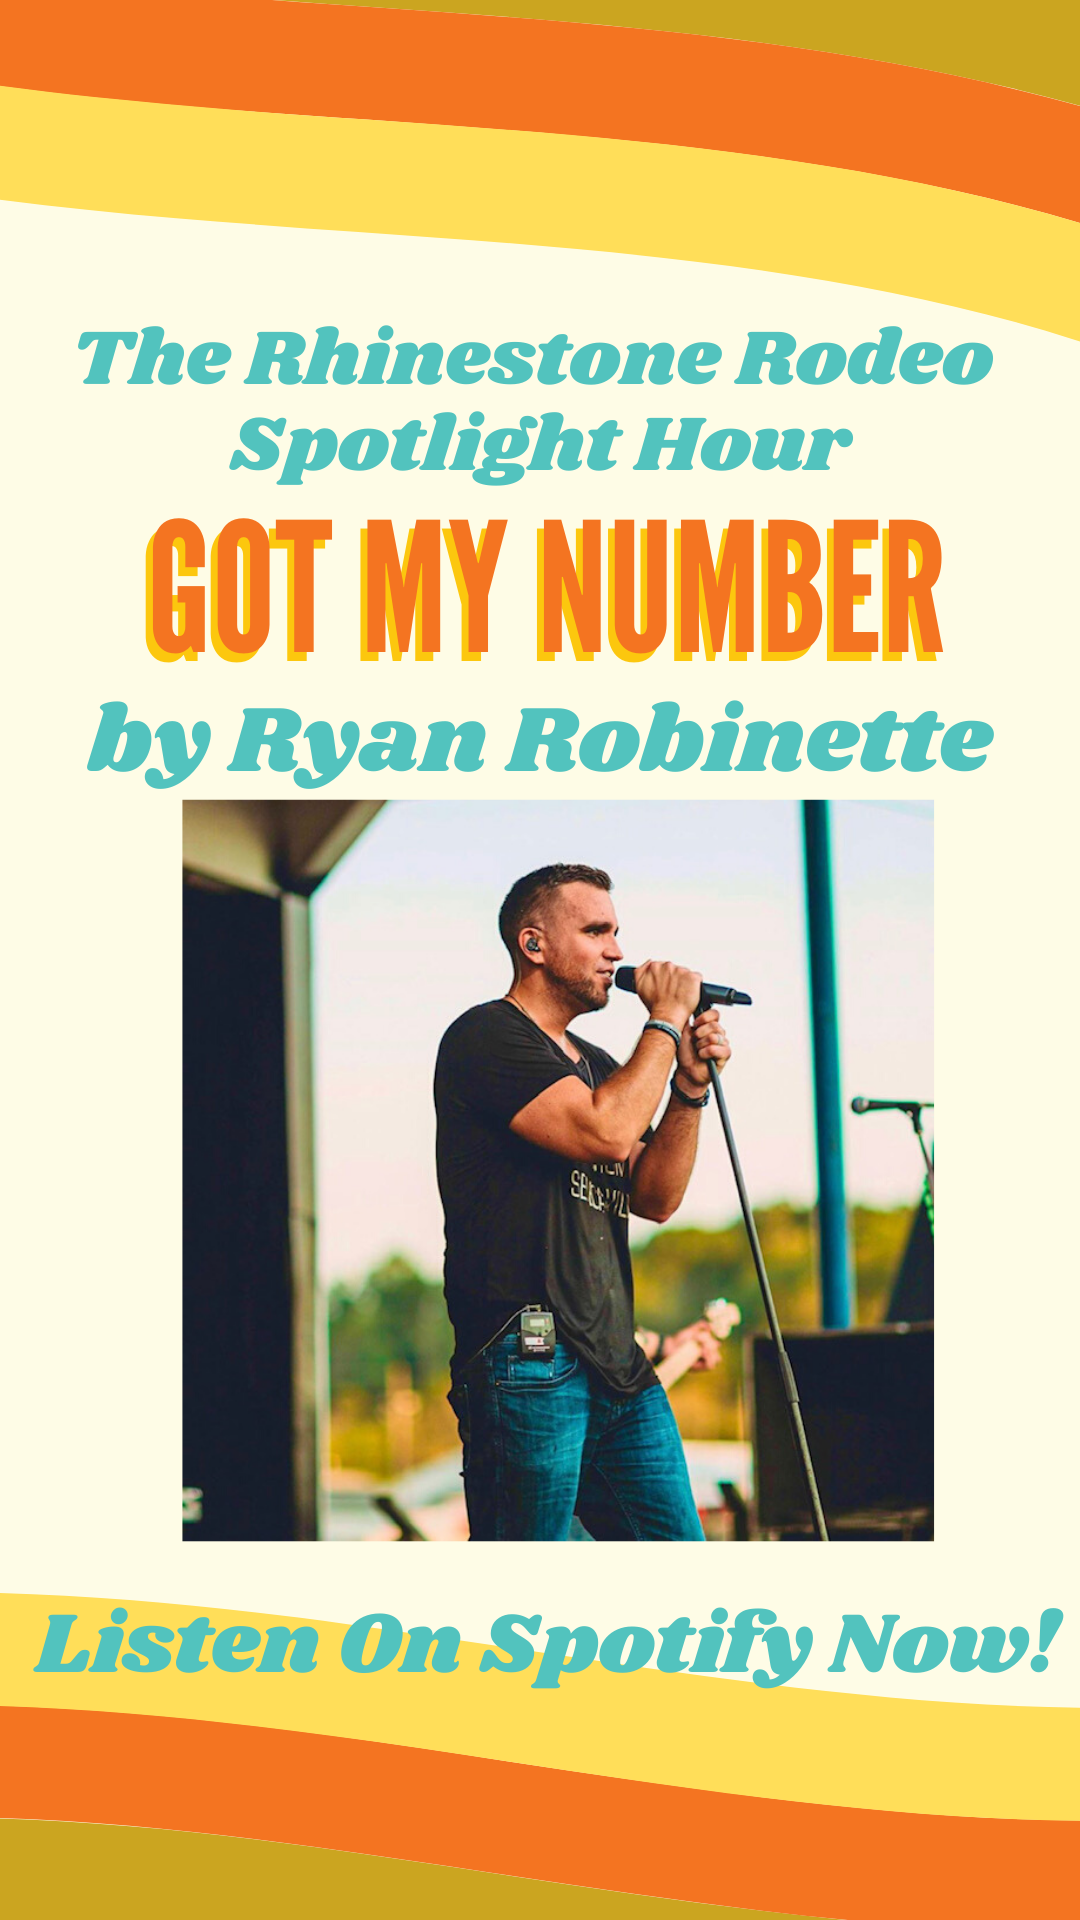 Ryan Robinette